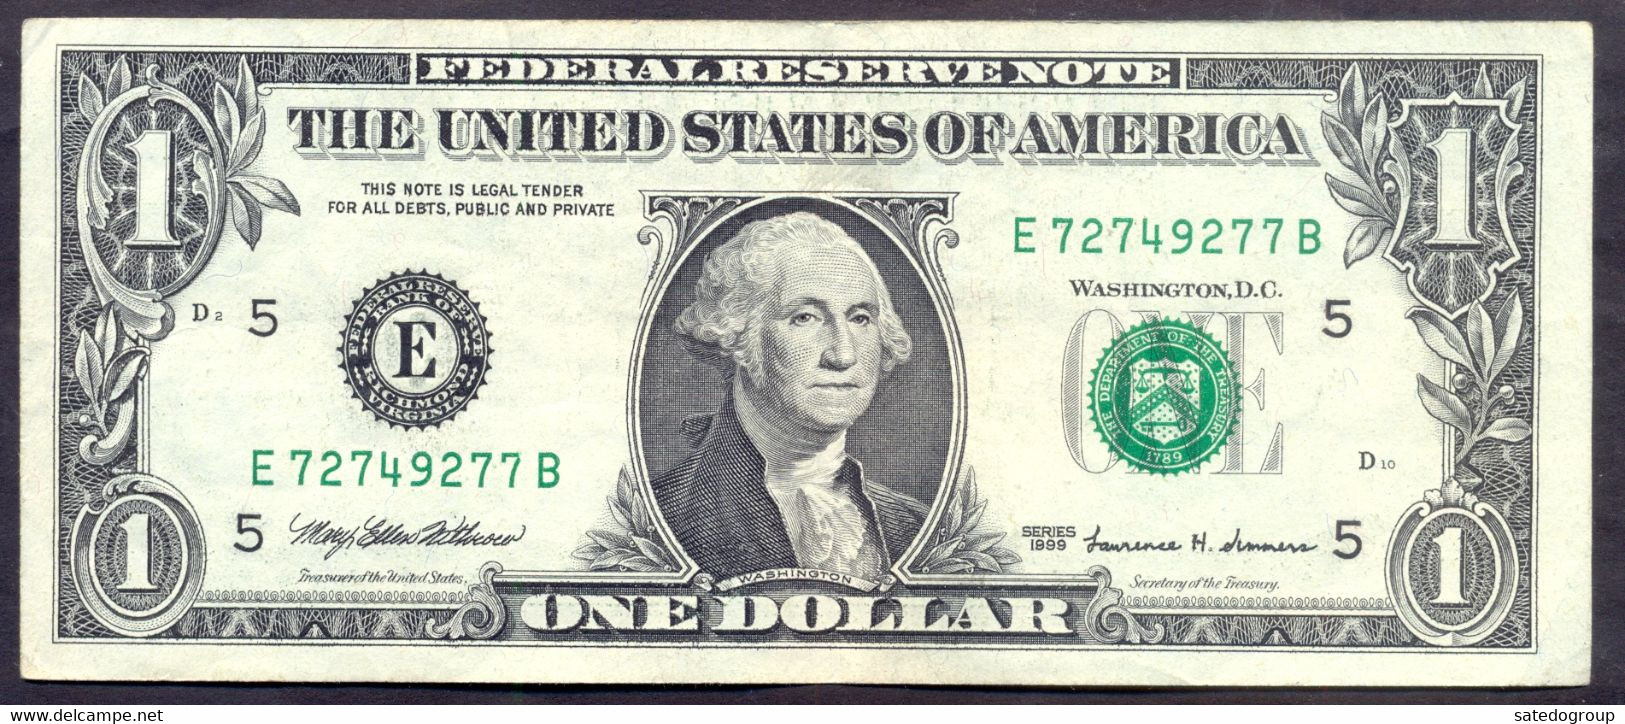 USA 1 Dollar 1999 E  - VF # P- 504 < E - Richmond VA > - Federal Reserve (1928-...)